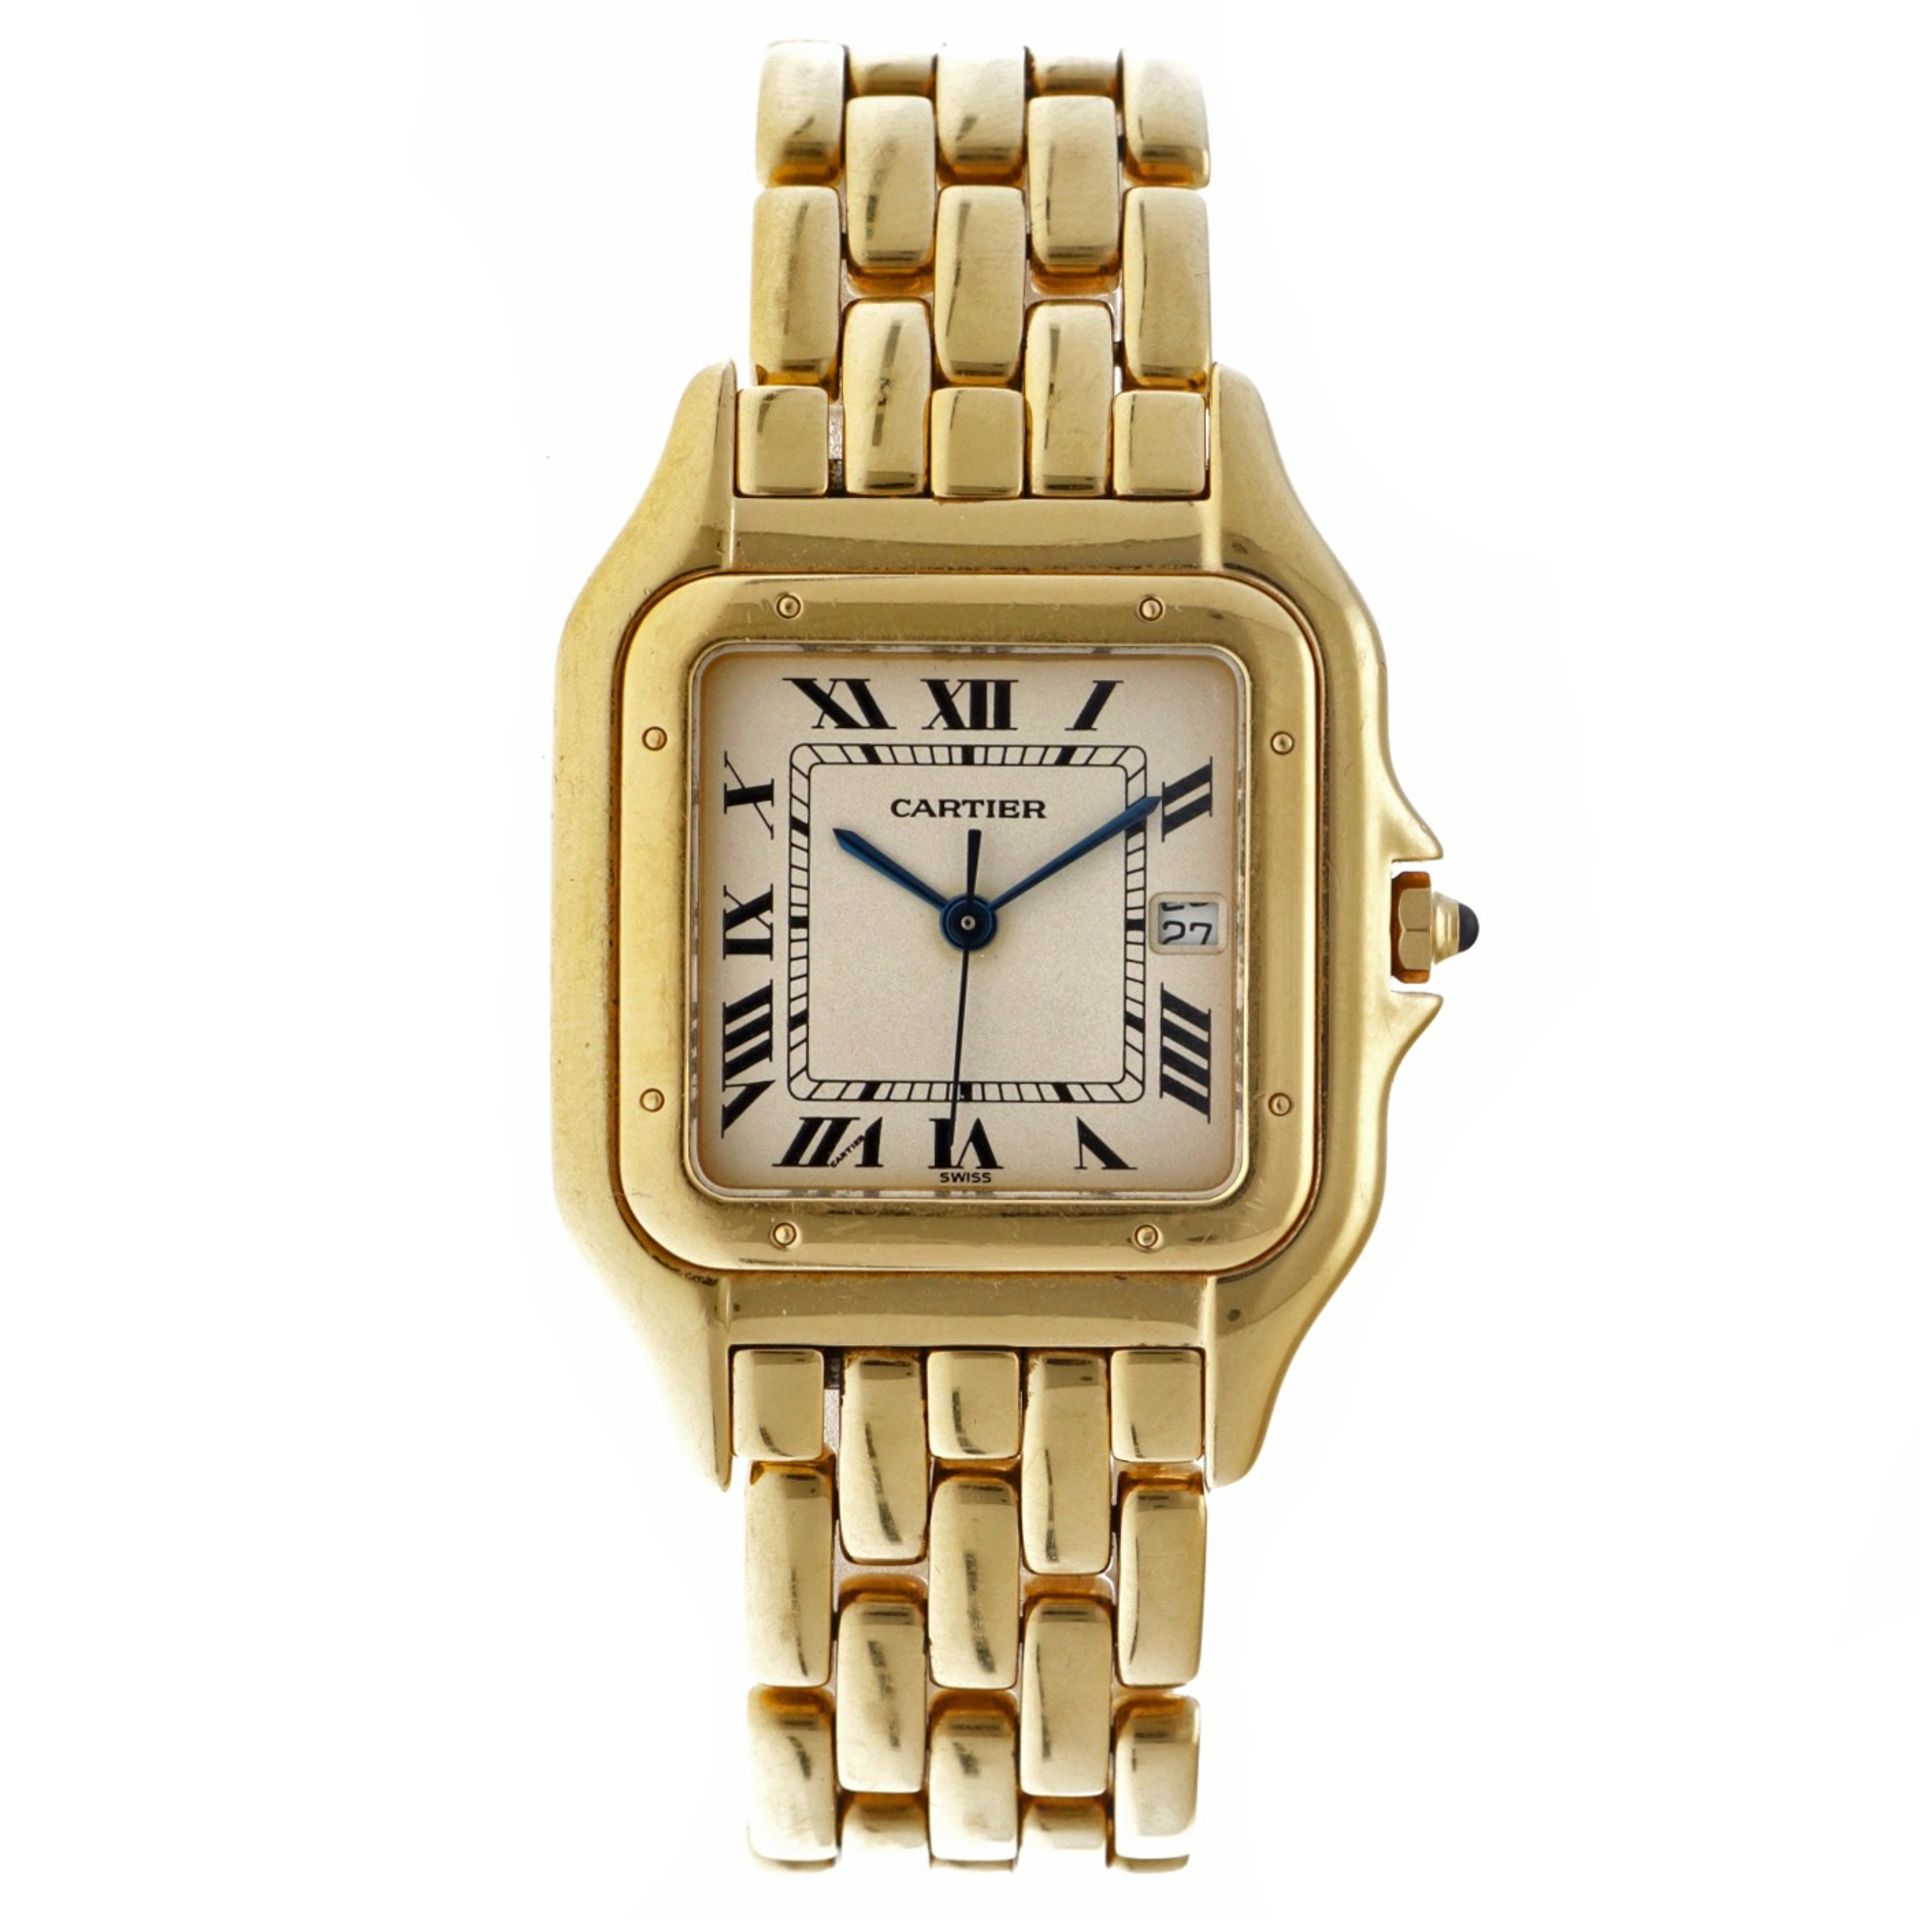 Cartier Panthère Jumbo 18K. 8839 - Men's watch.